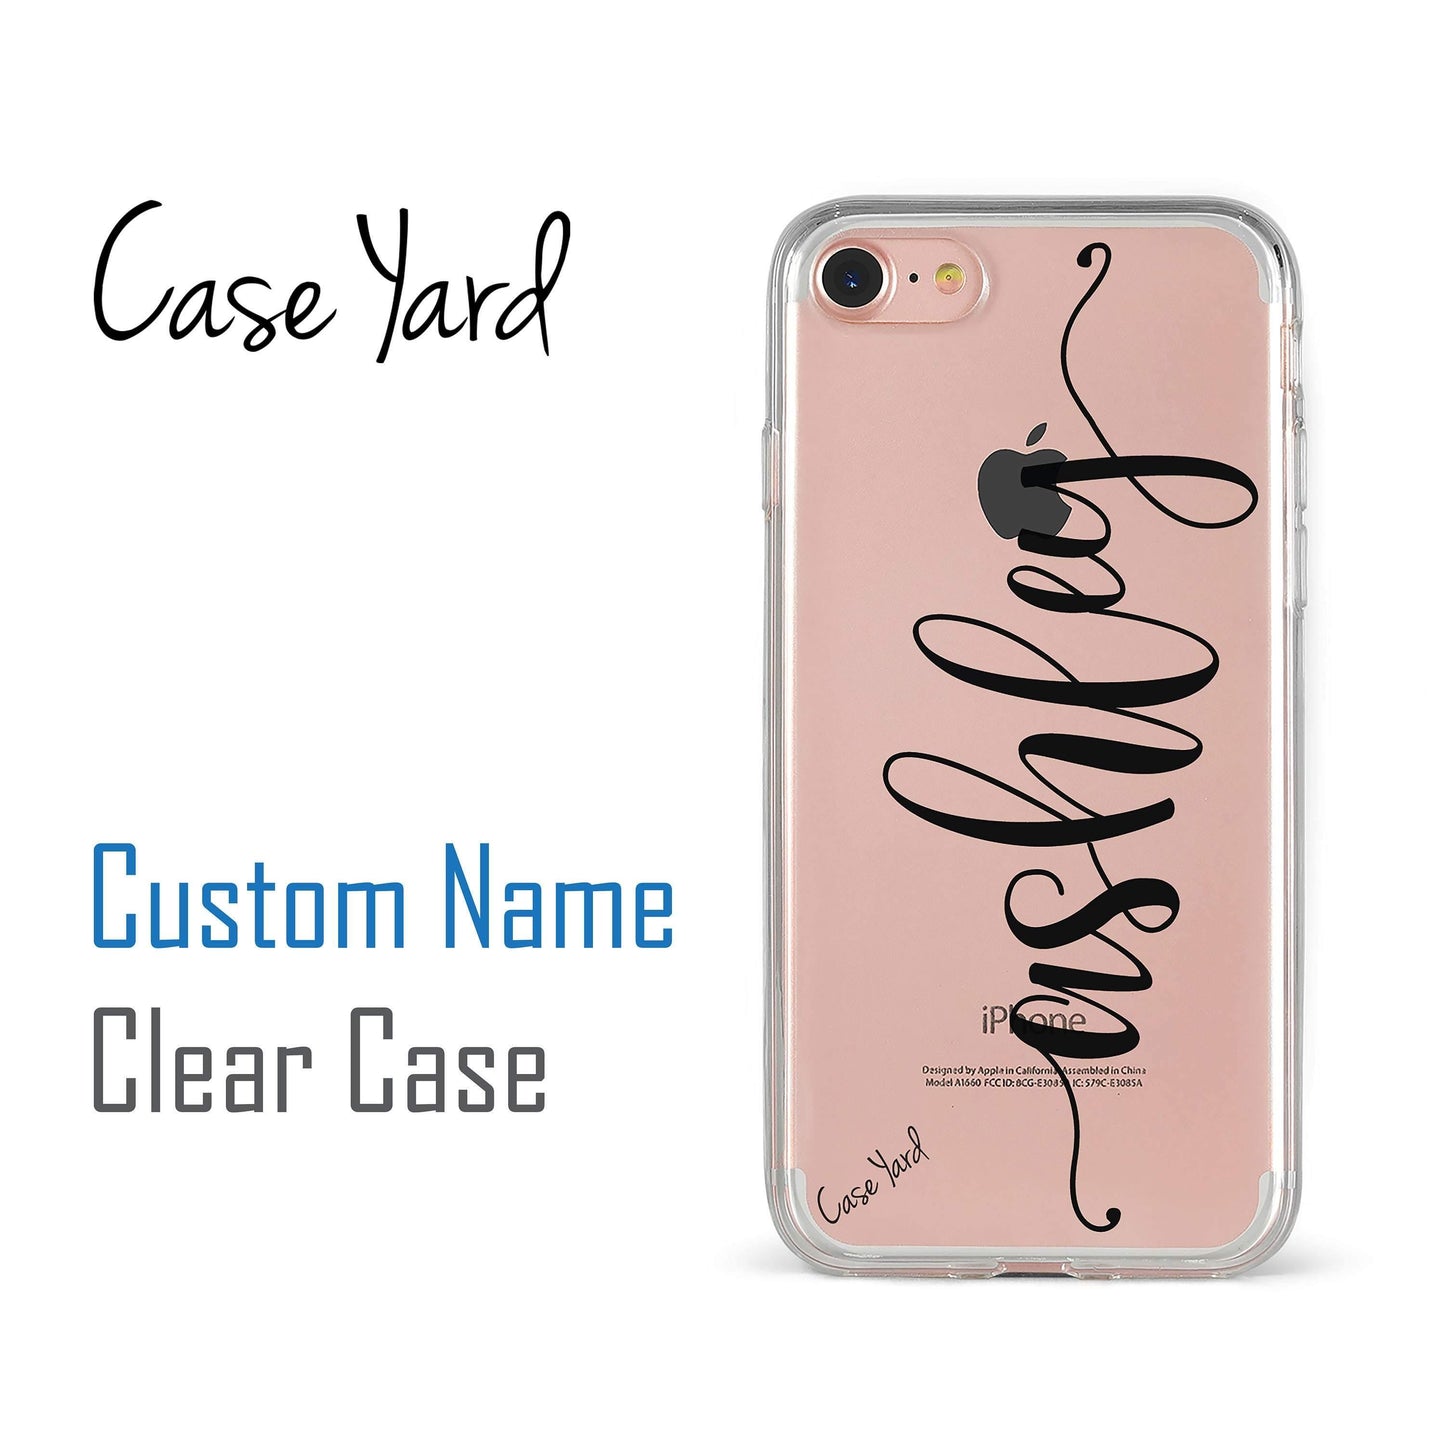 Custom Design Personalized Silicon TPU Case, Perfect Gift - Case Yard USA